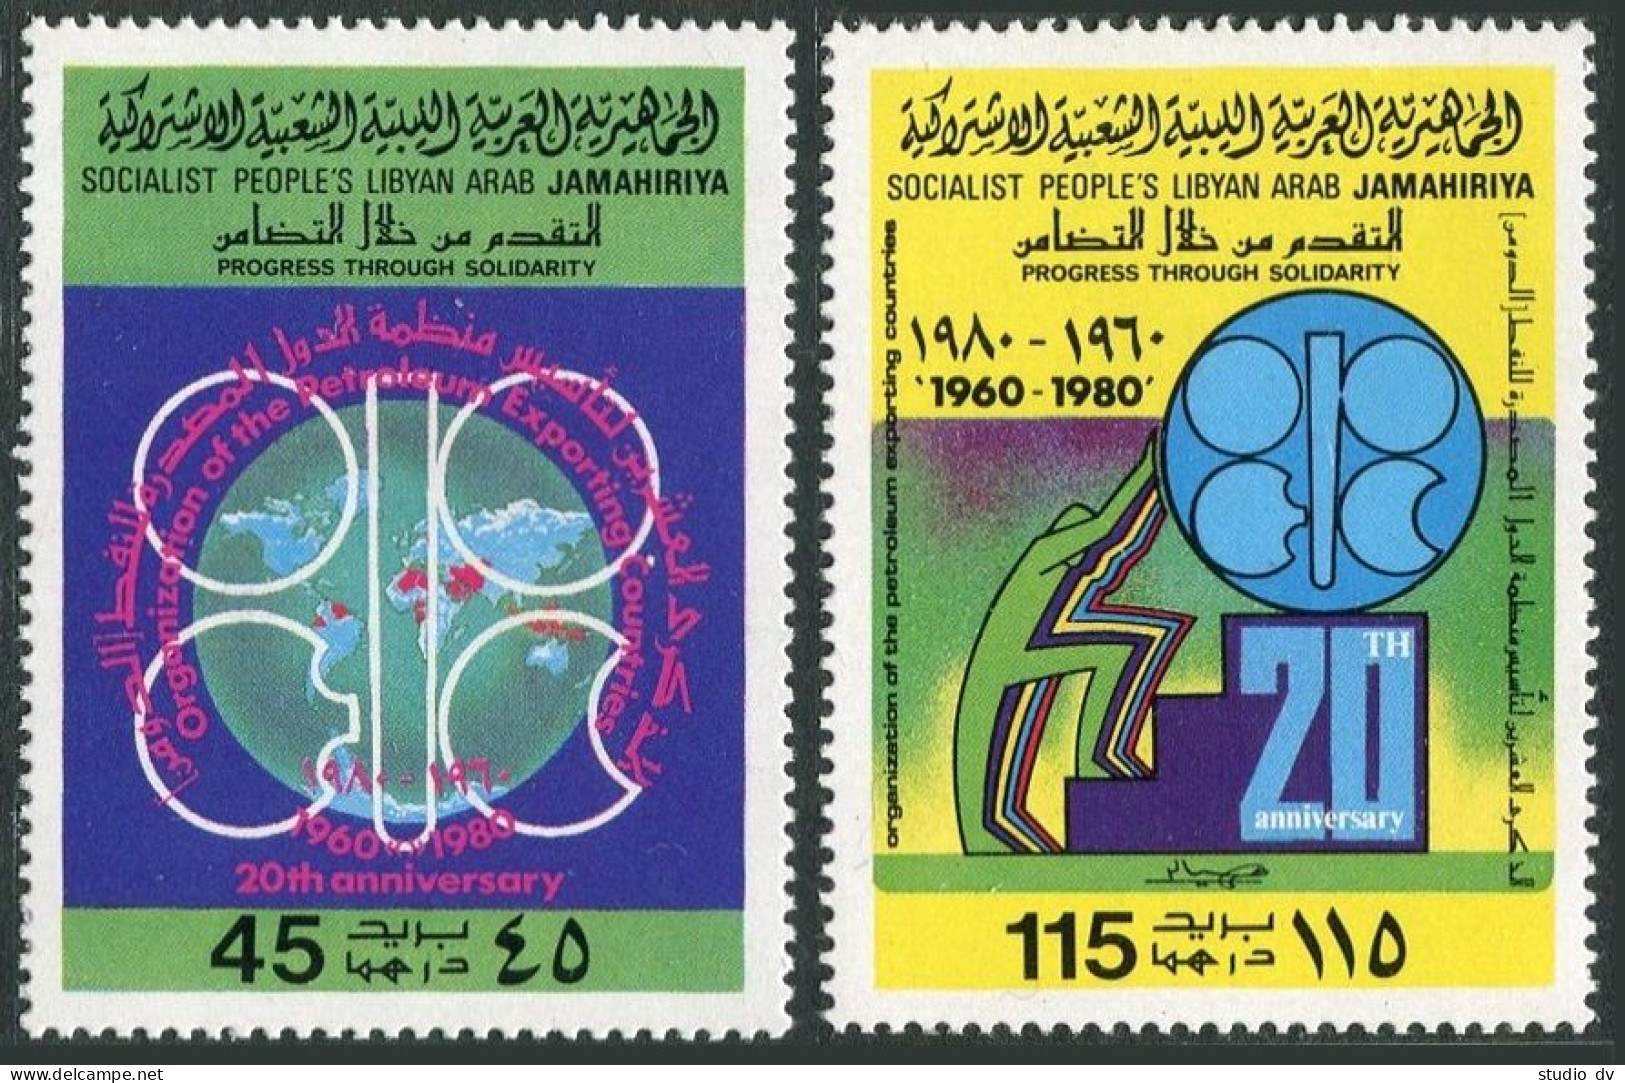 Libya 867-868,MNH.Michel 842-843. OPEC,20th Ann.1980.Emblem,Globe. - Libye